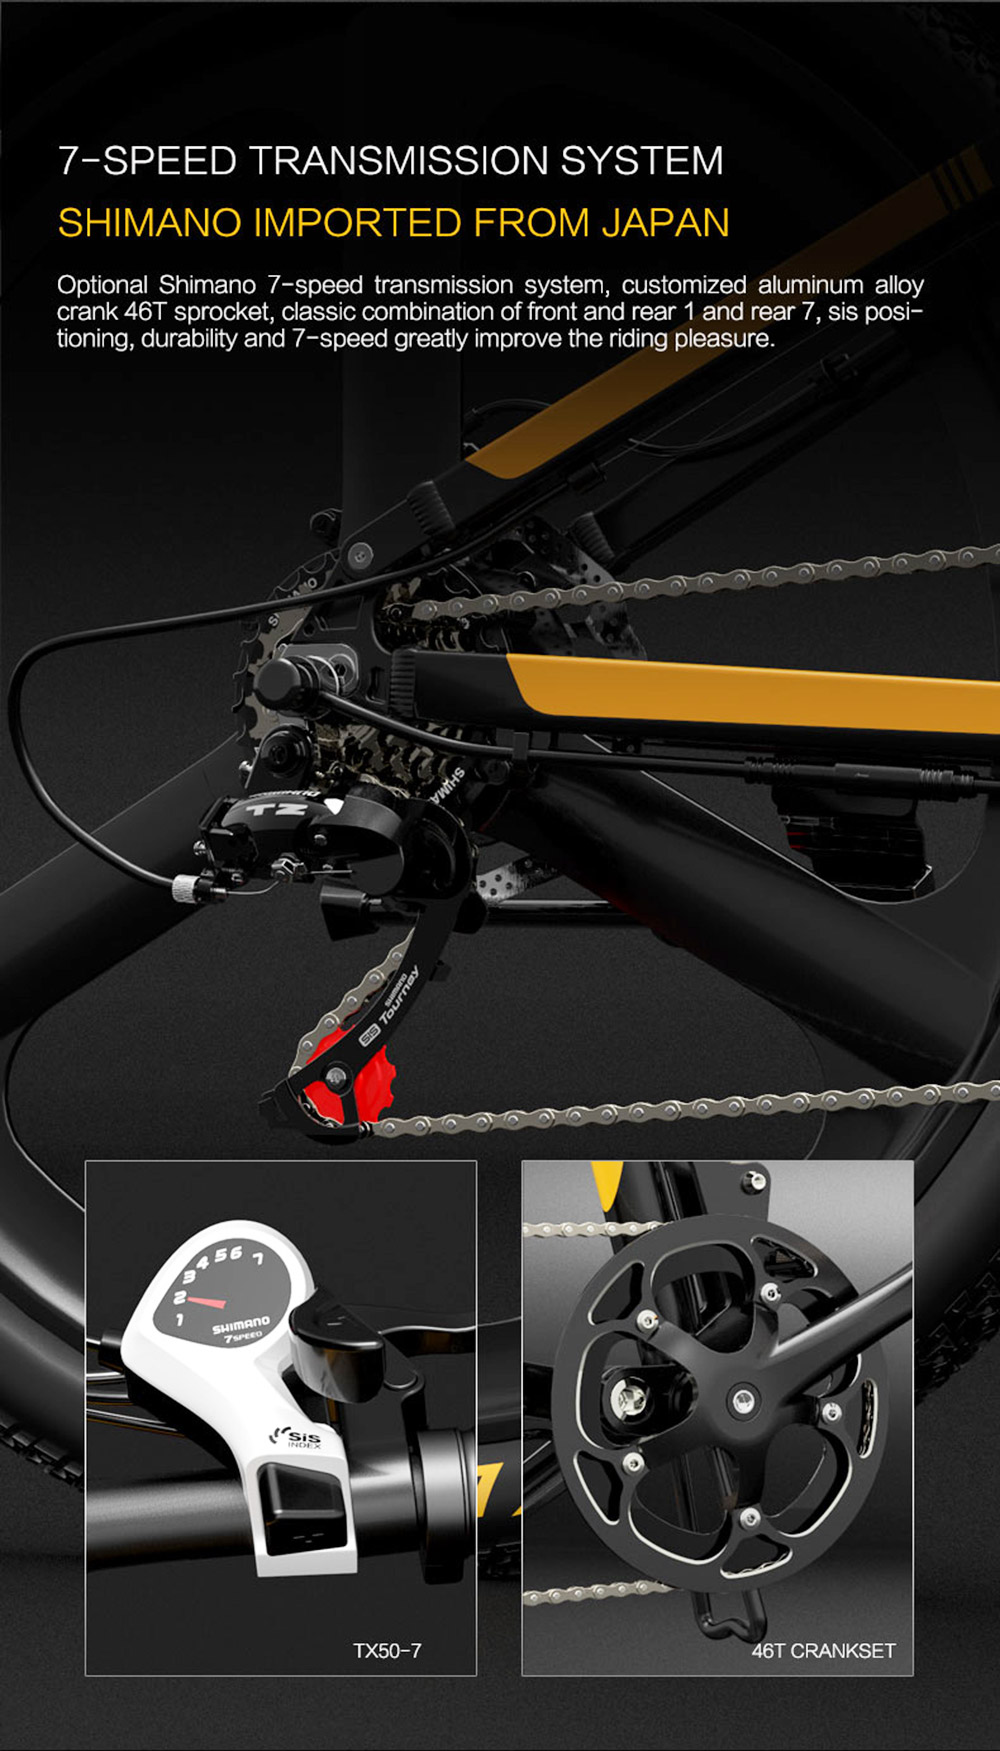 BEZIOR X500PRO Bicicleta de Montaña Eléctrica Plegable 500W 30Km/h Negro Amarillo